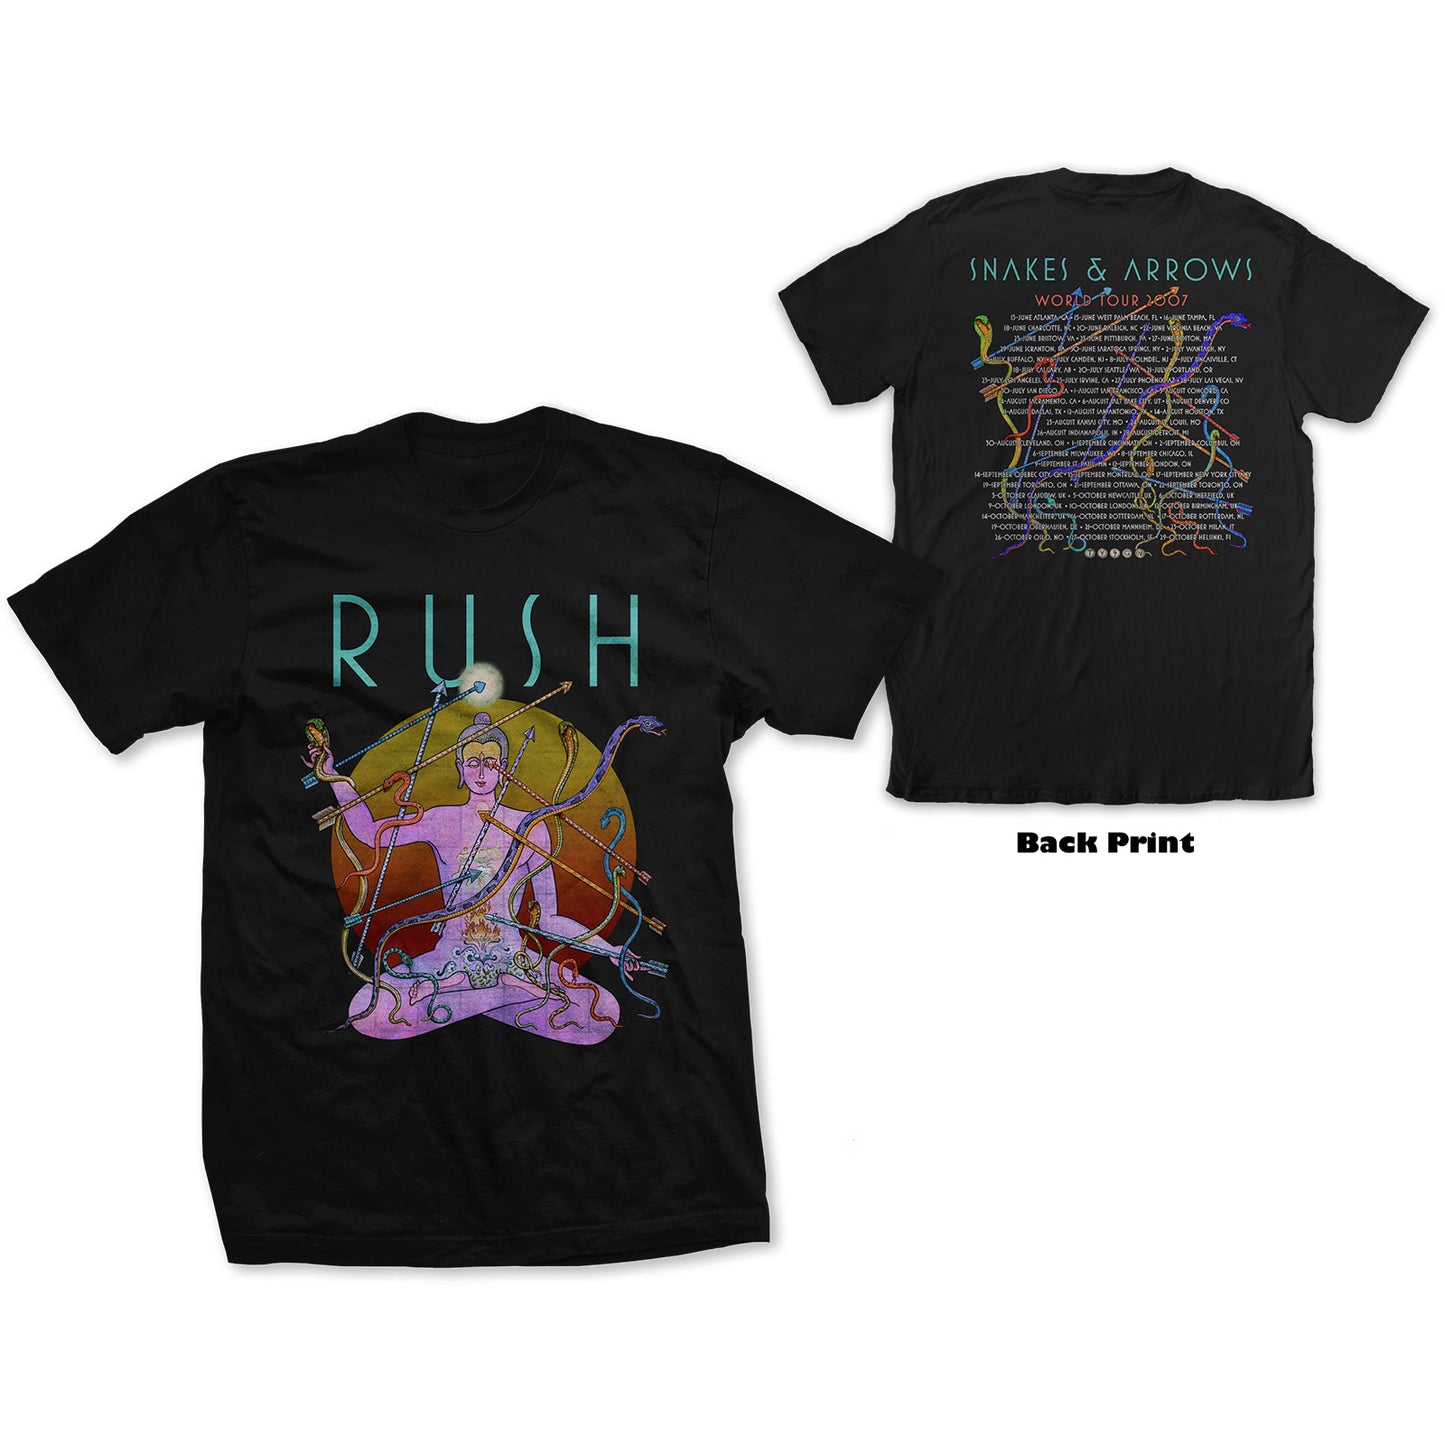 Rush T-Shirt: Snakes & Arrows Tour 2007